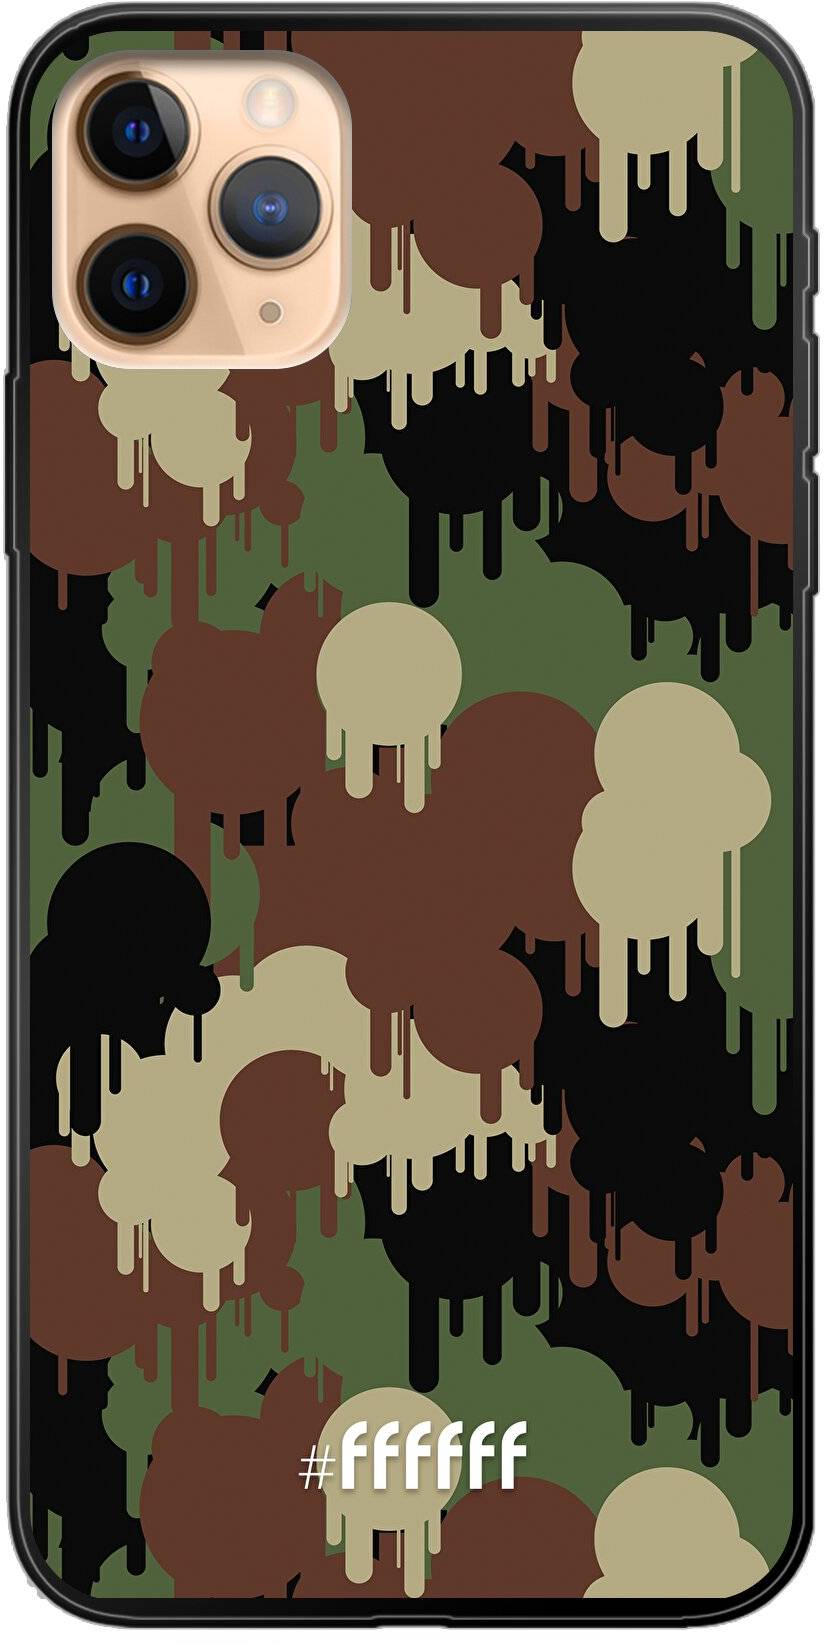 Graffiti Camouflage iPhone 11 Pro Max